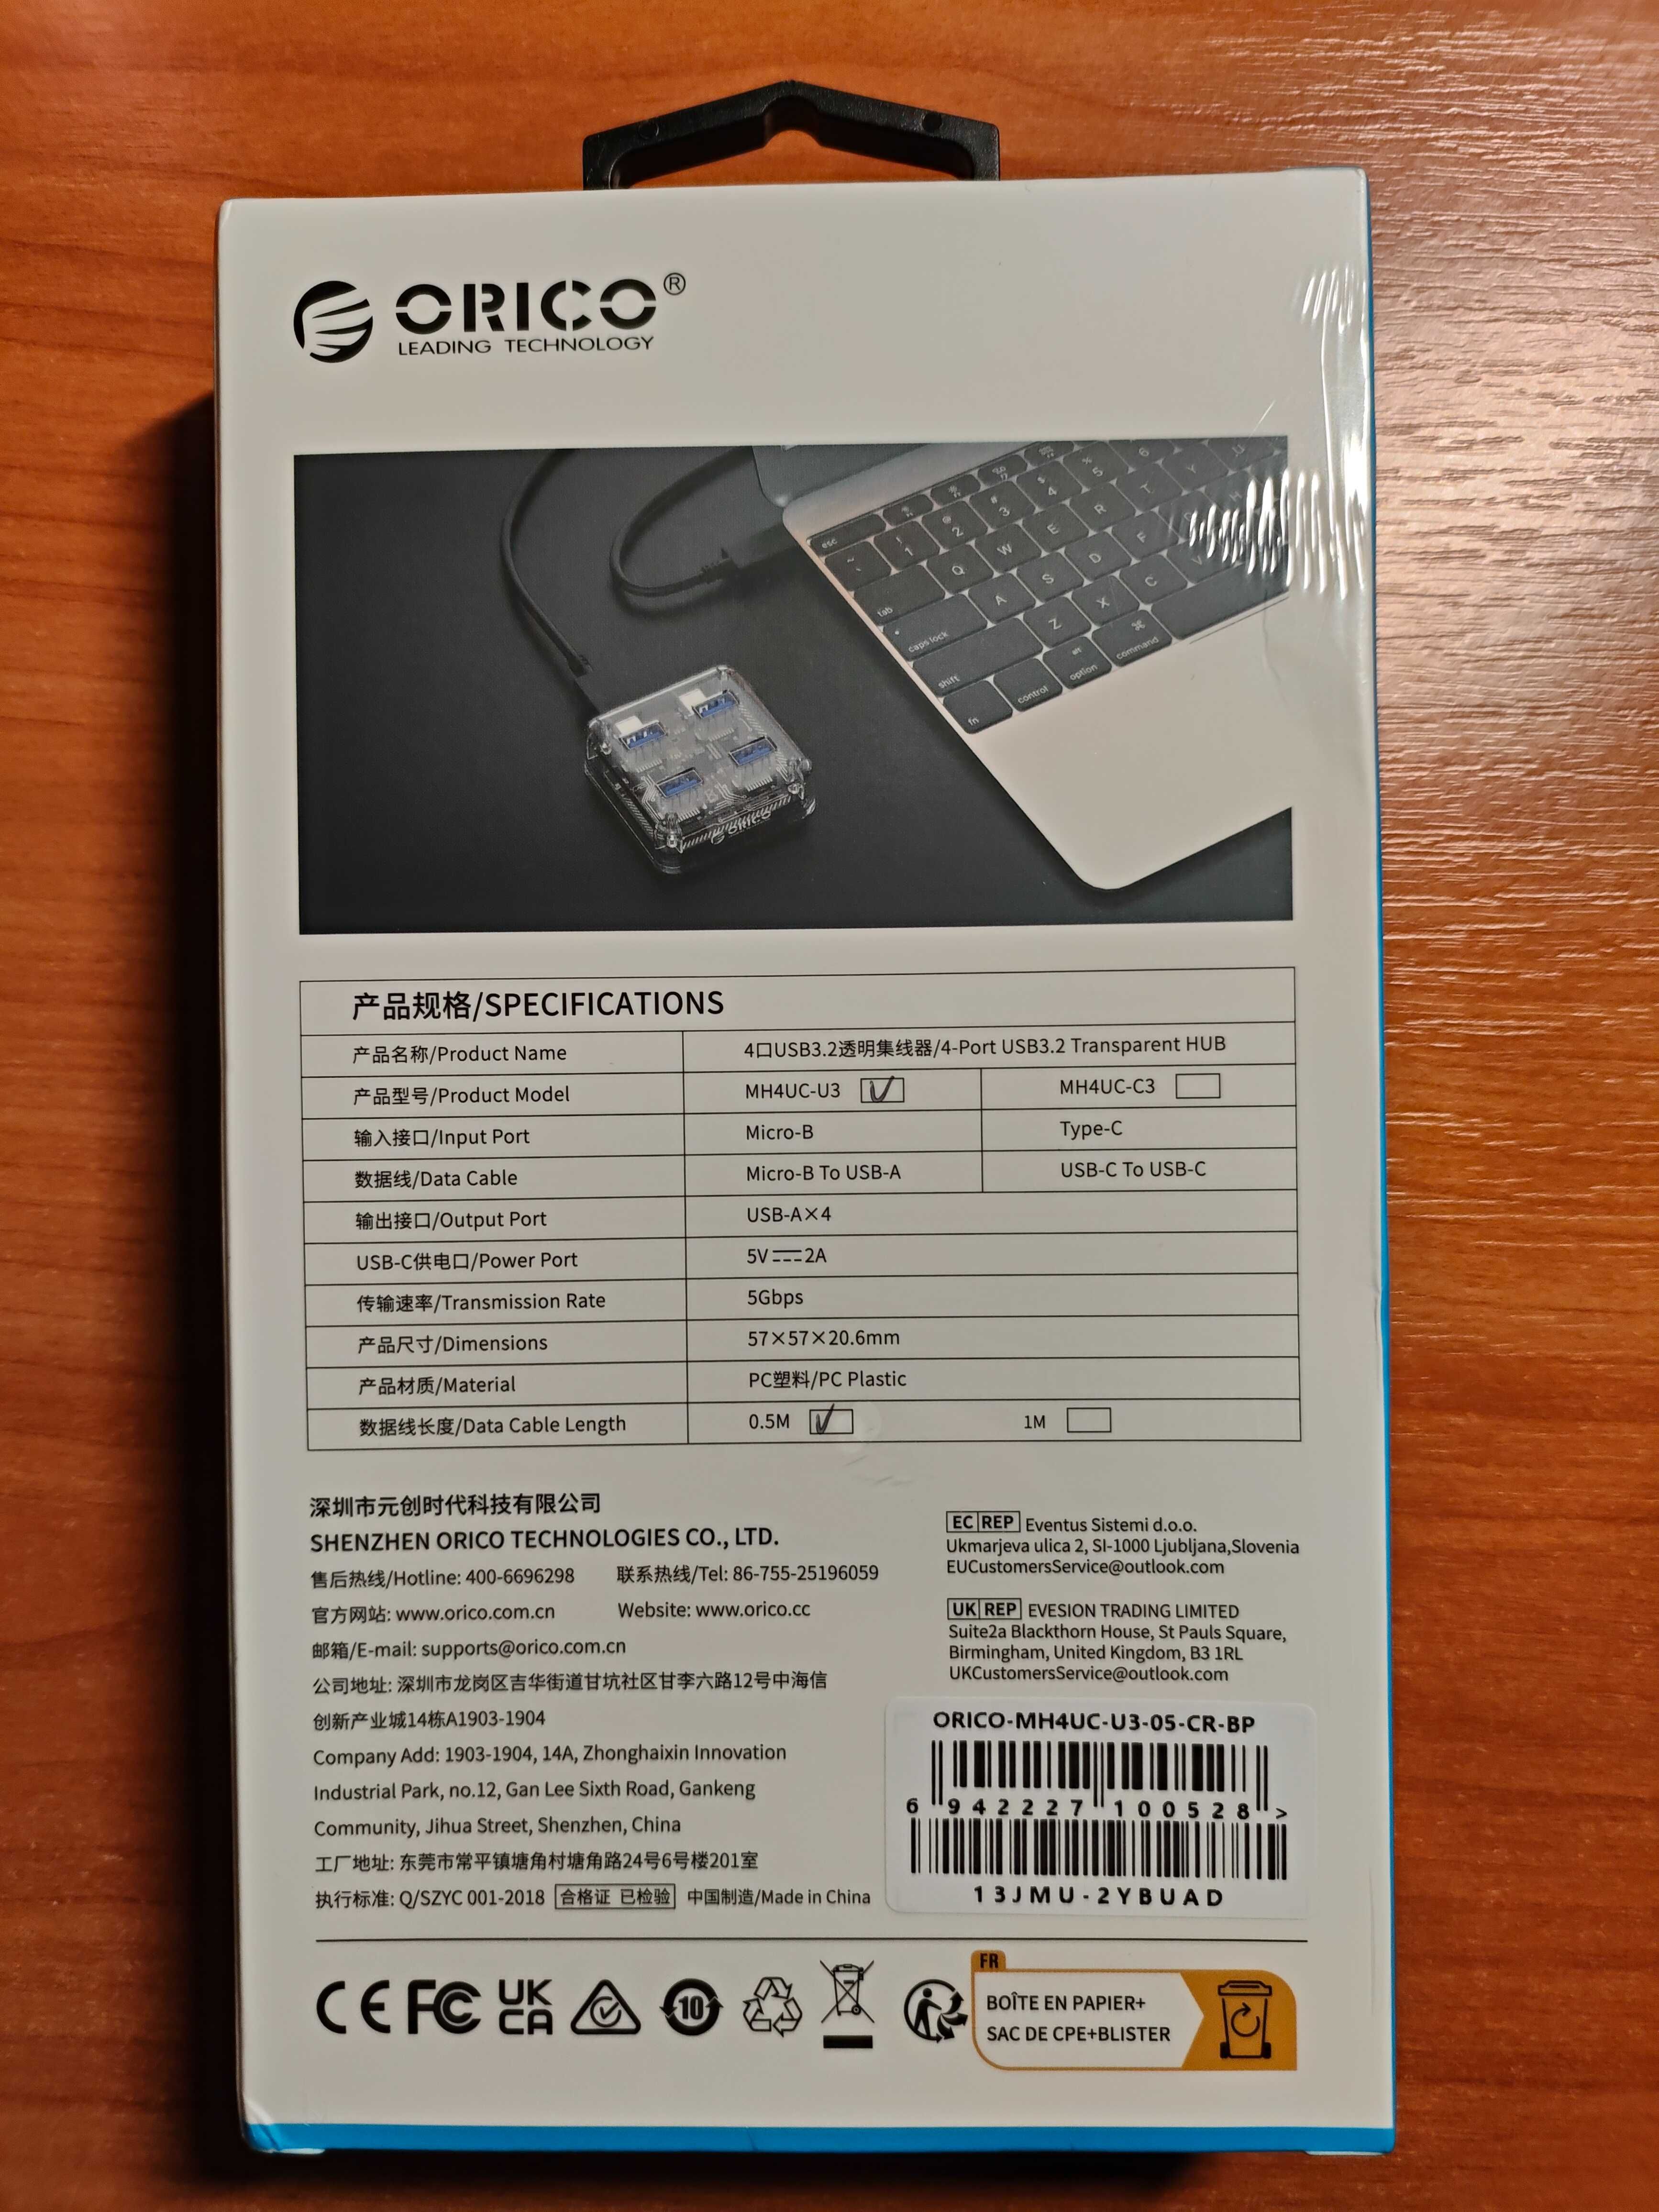 Orico Hub 4-port USB 3.0 5Gbps USB A USB 3.2